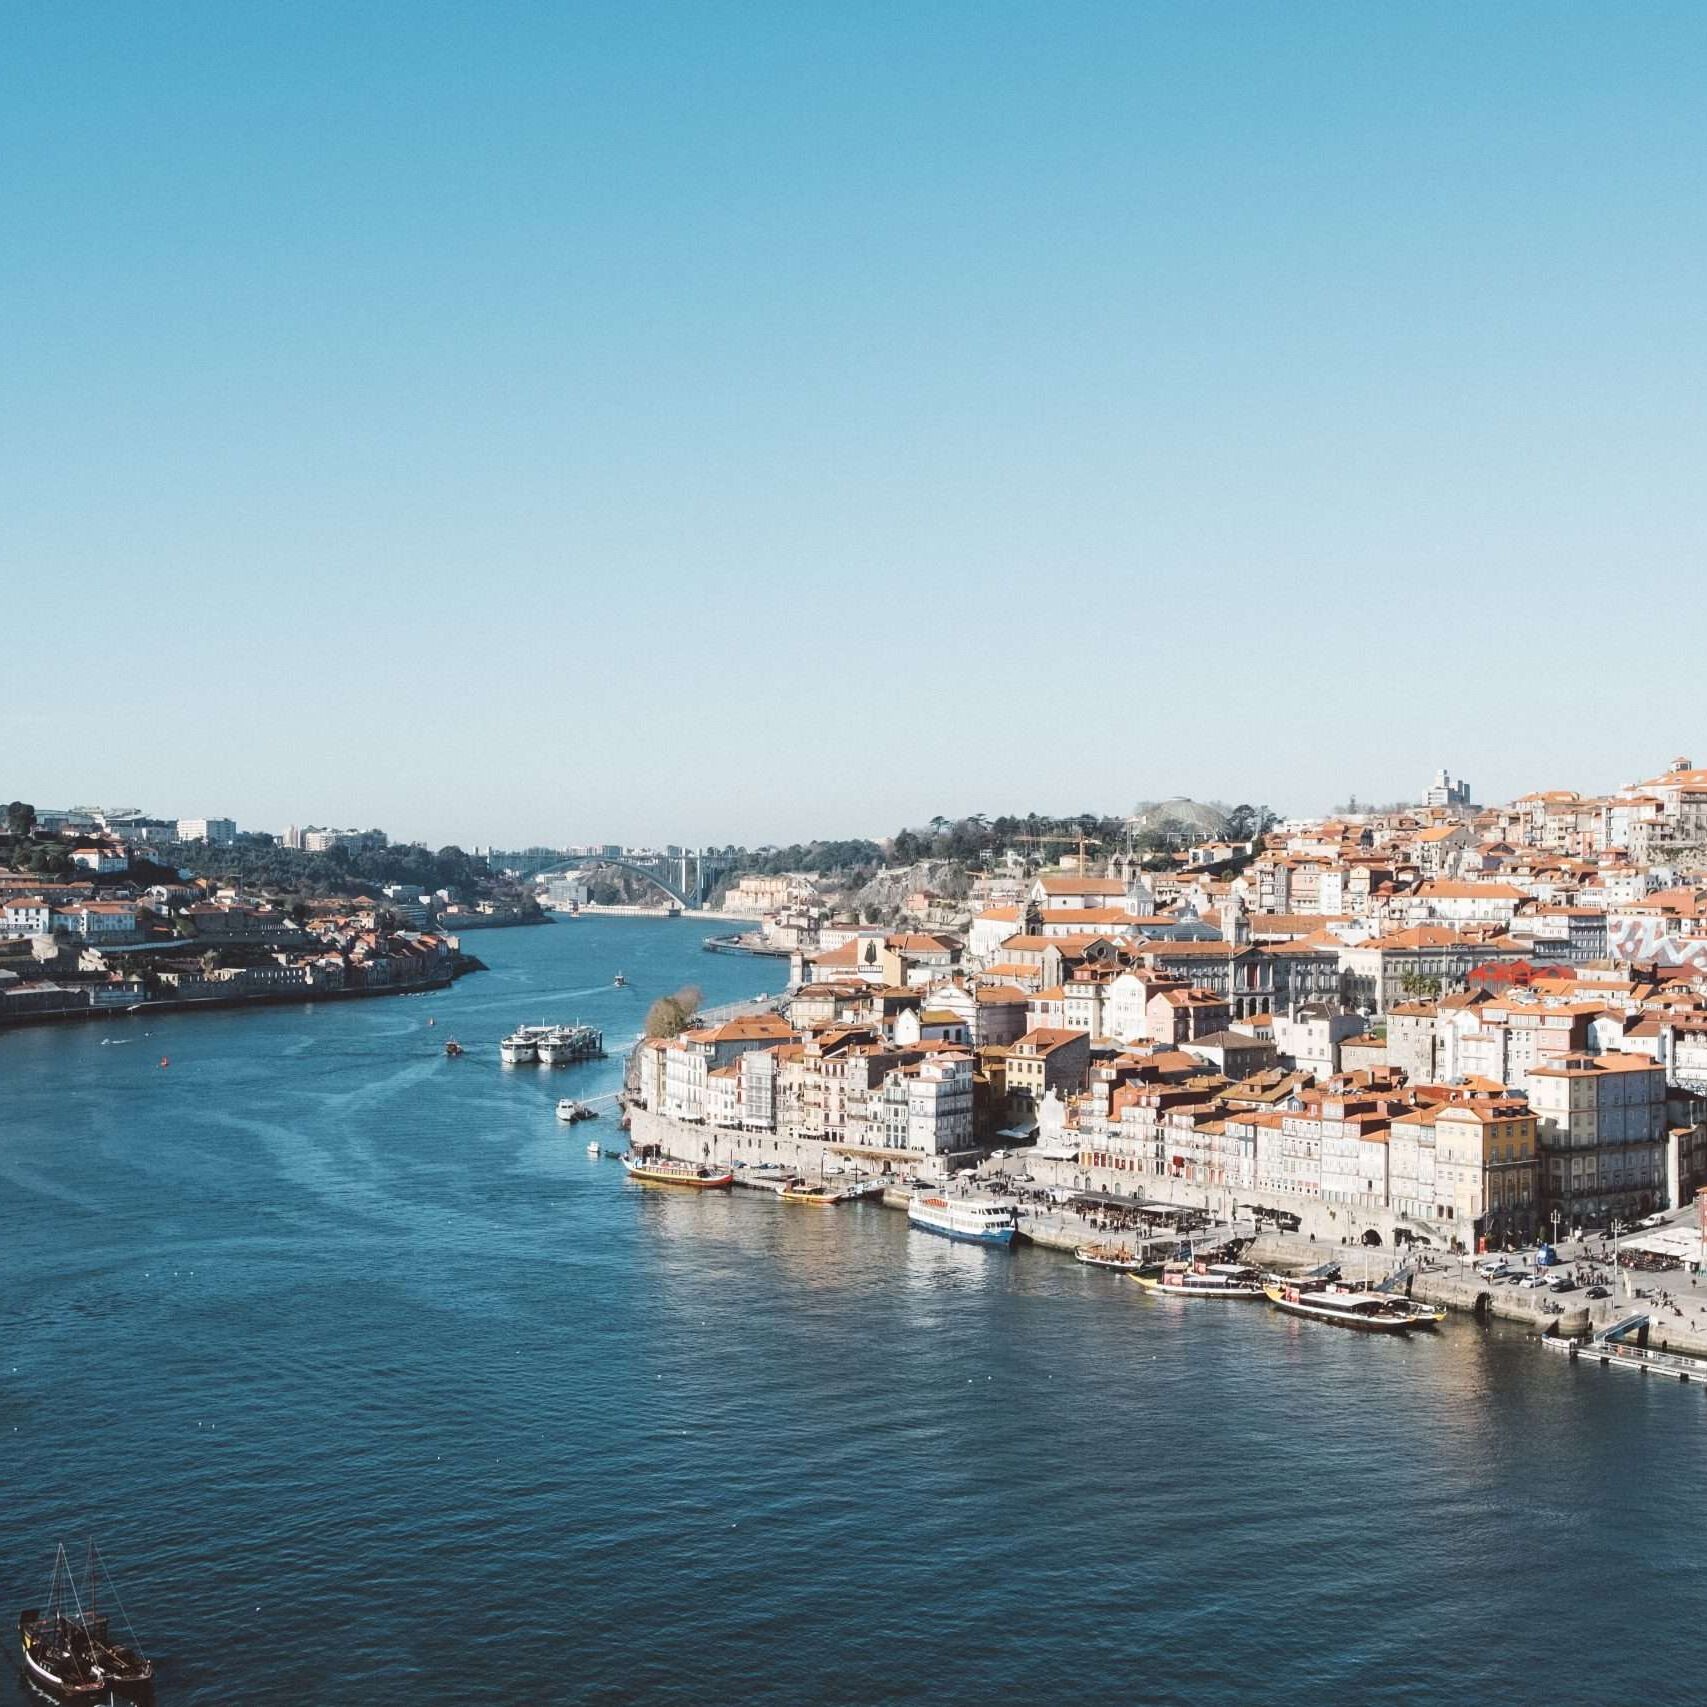 Portugal river and city landscape